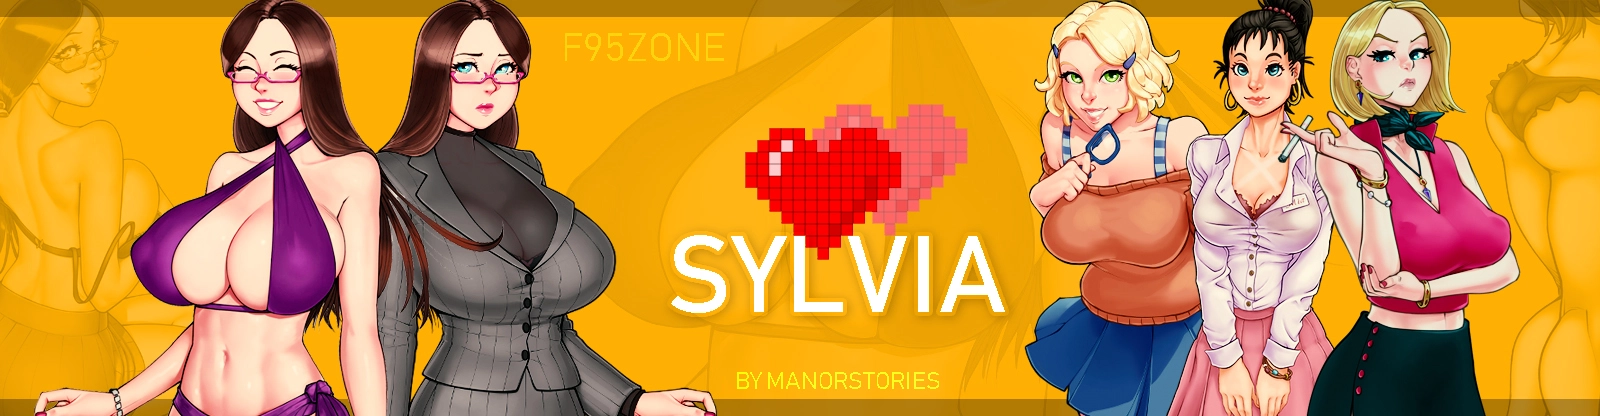 Sylvia main image